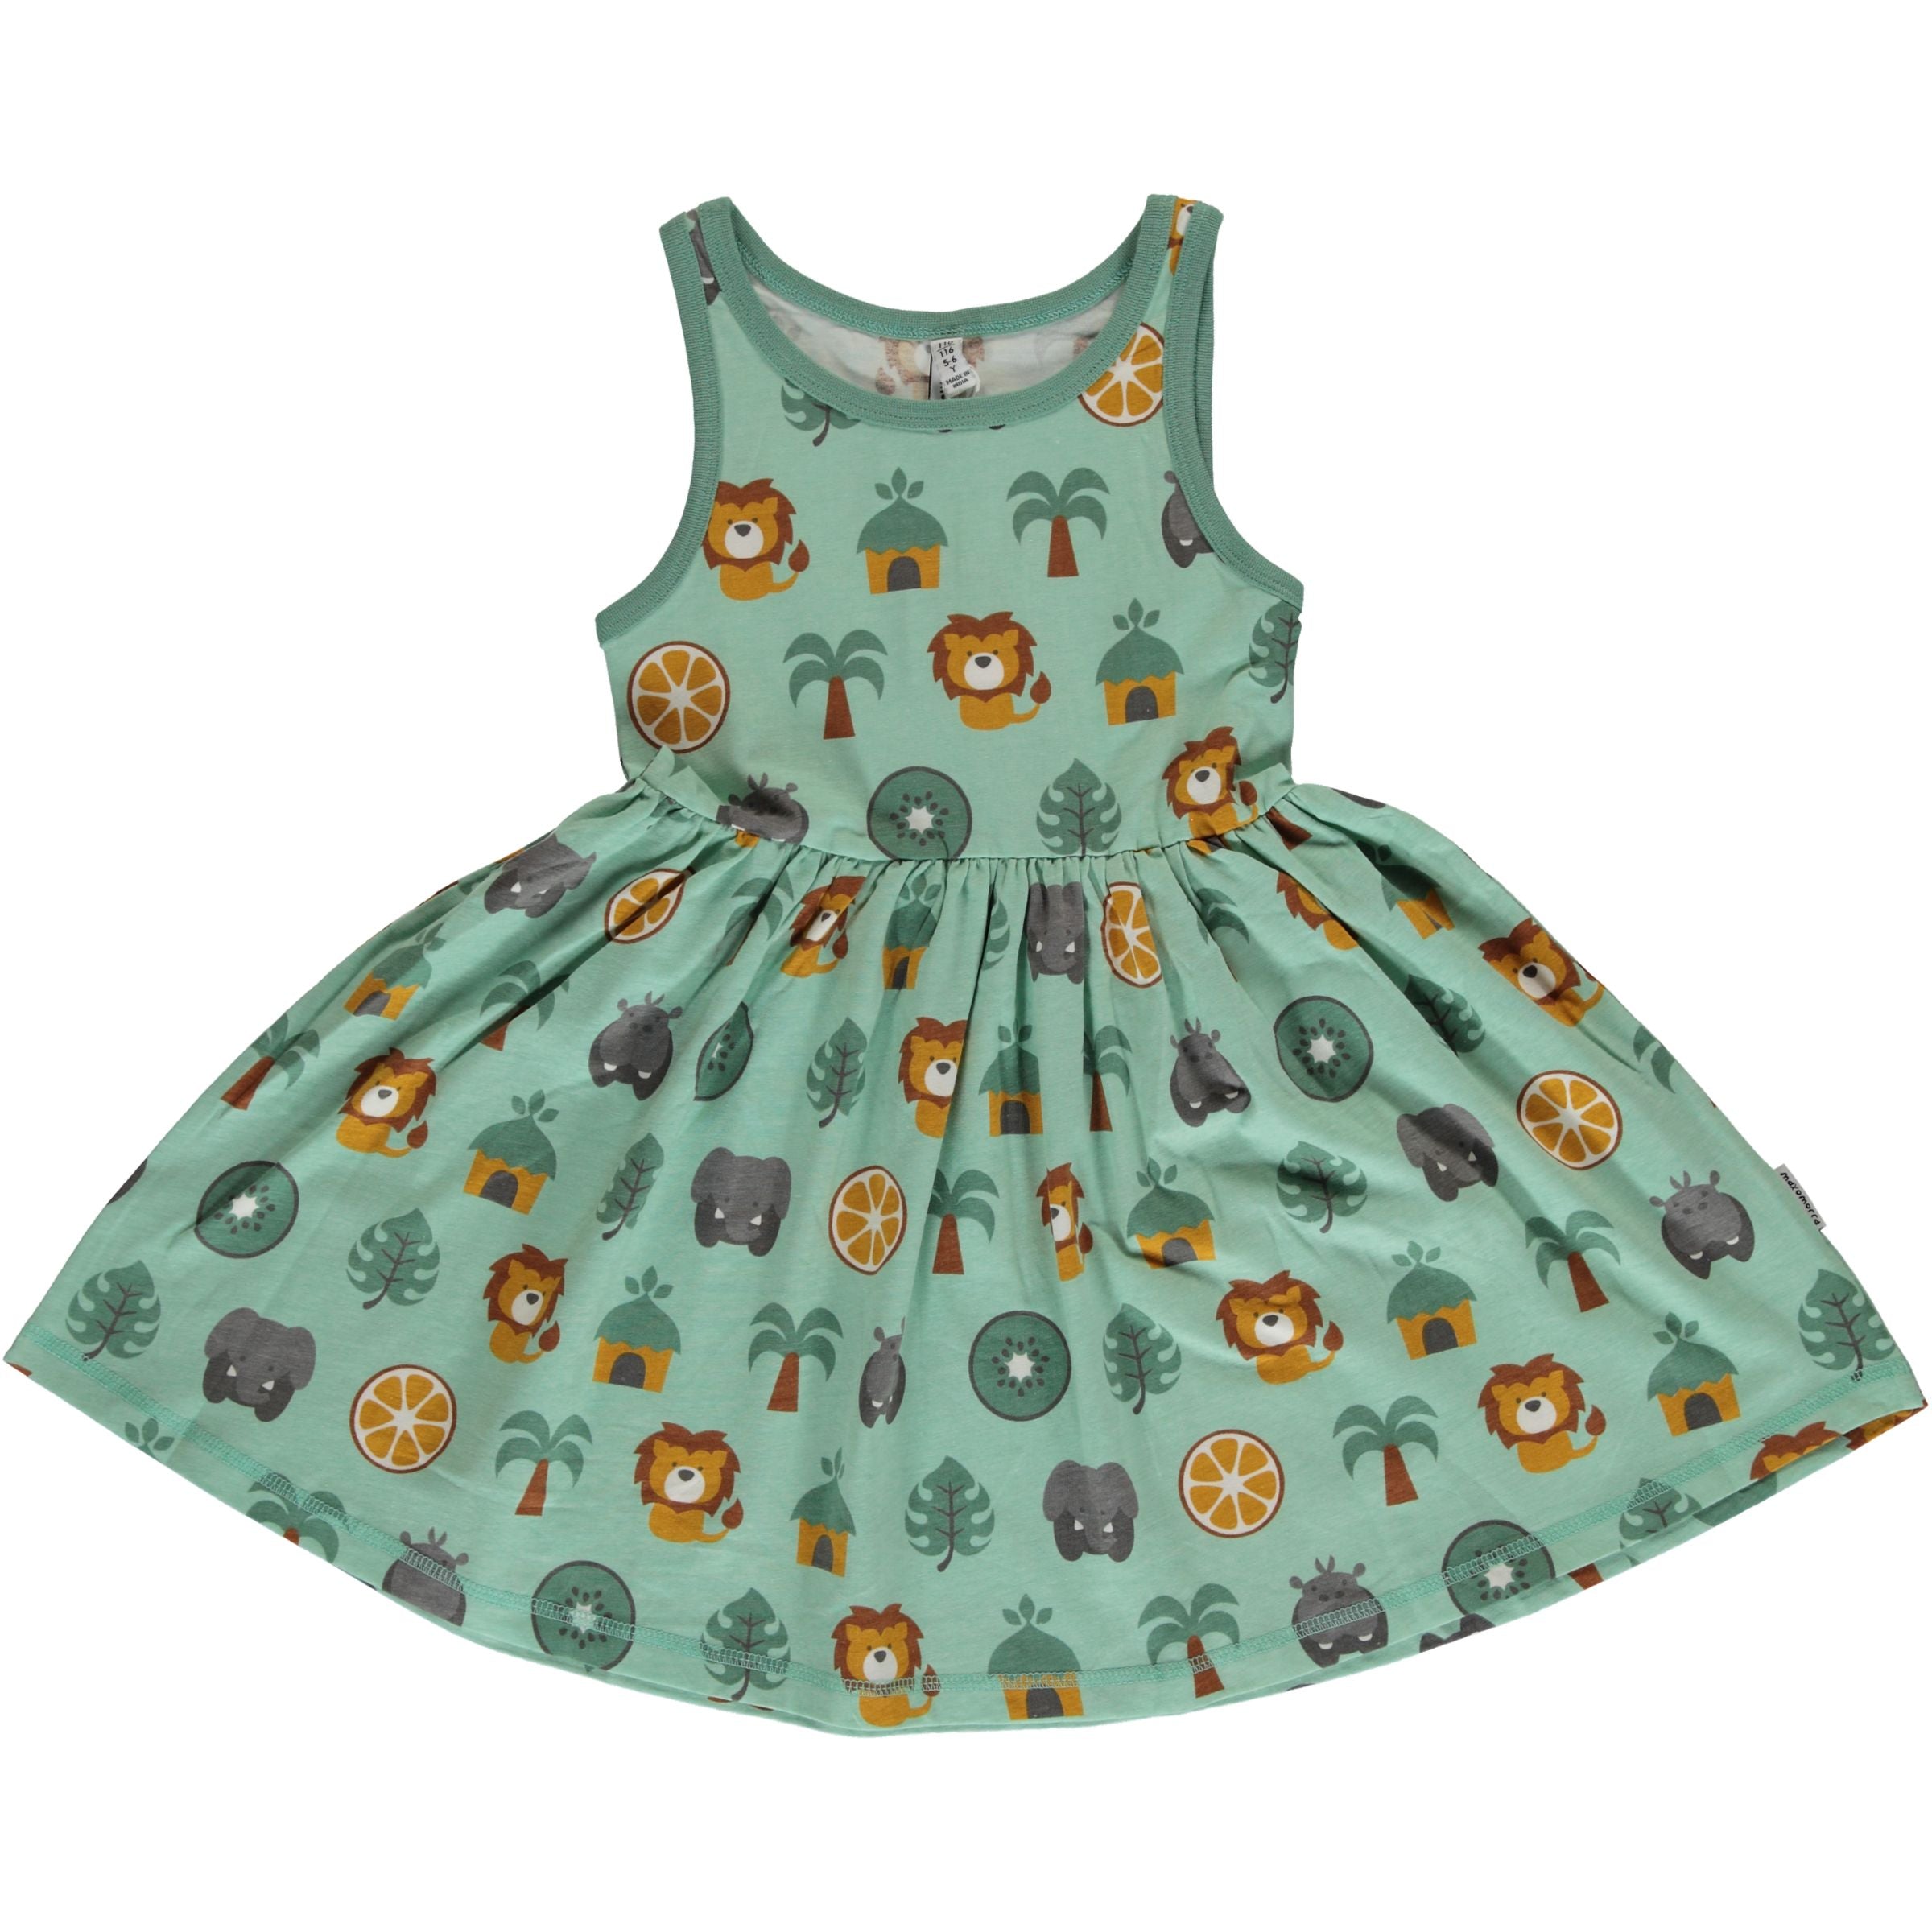 Children's Jungle Spin Dress - Maxomorra (Last Available)